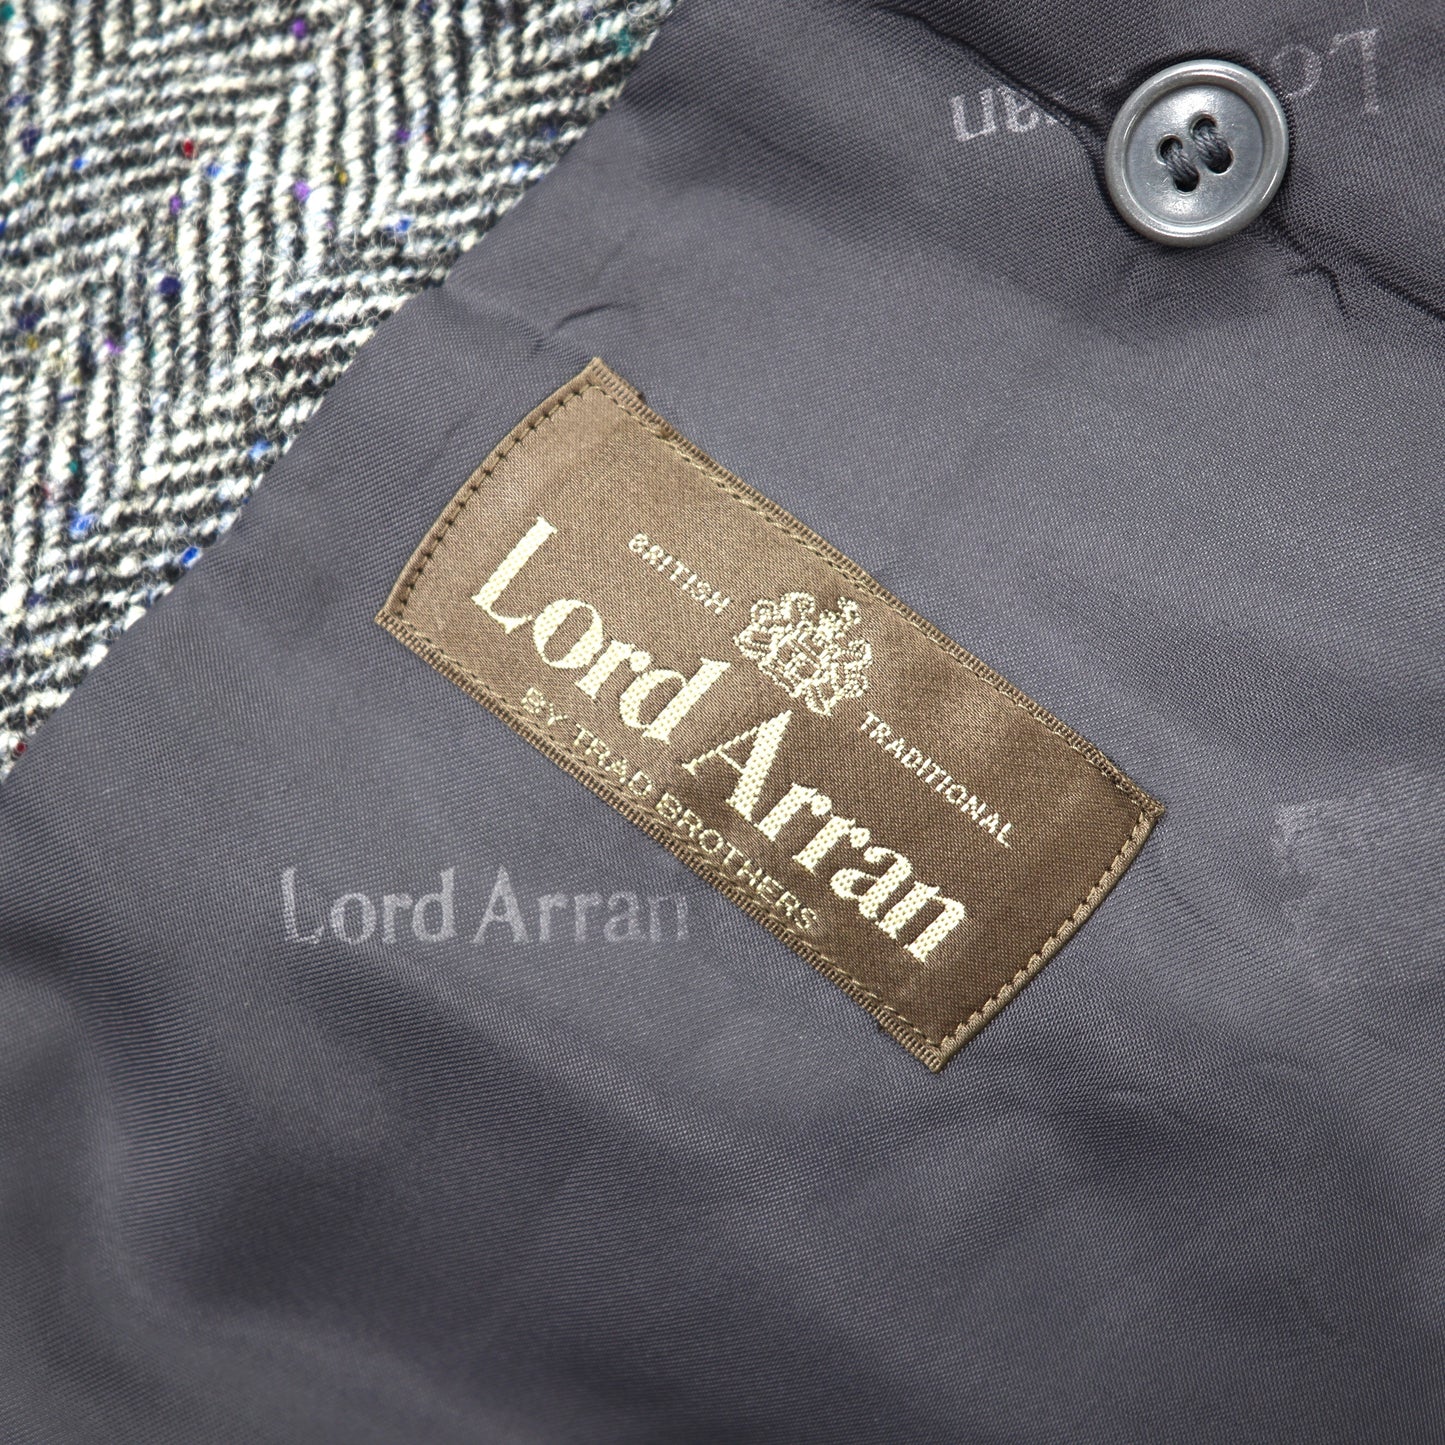 Load Arran by TRAD BROTHERS × T.M.HUNTER ツイードジャケット 165 グレー スコットランド製